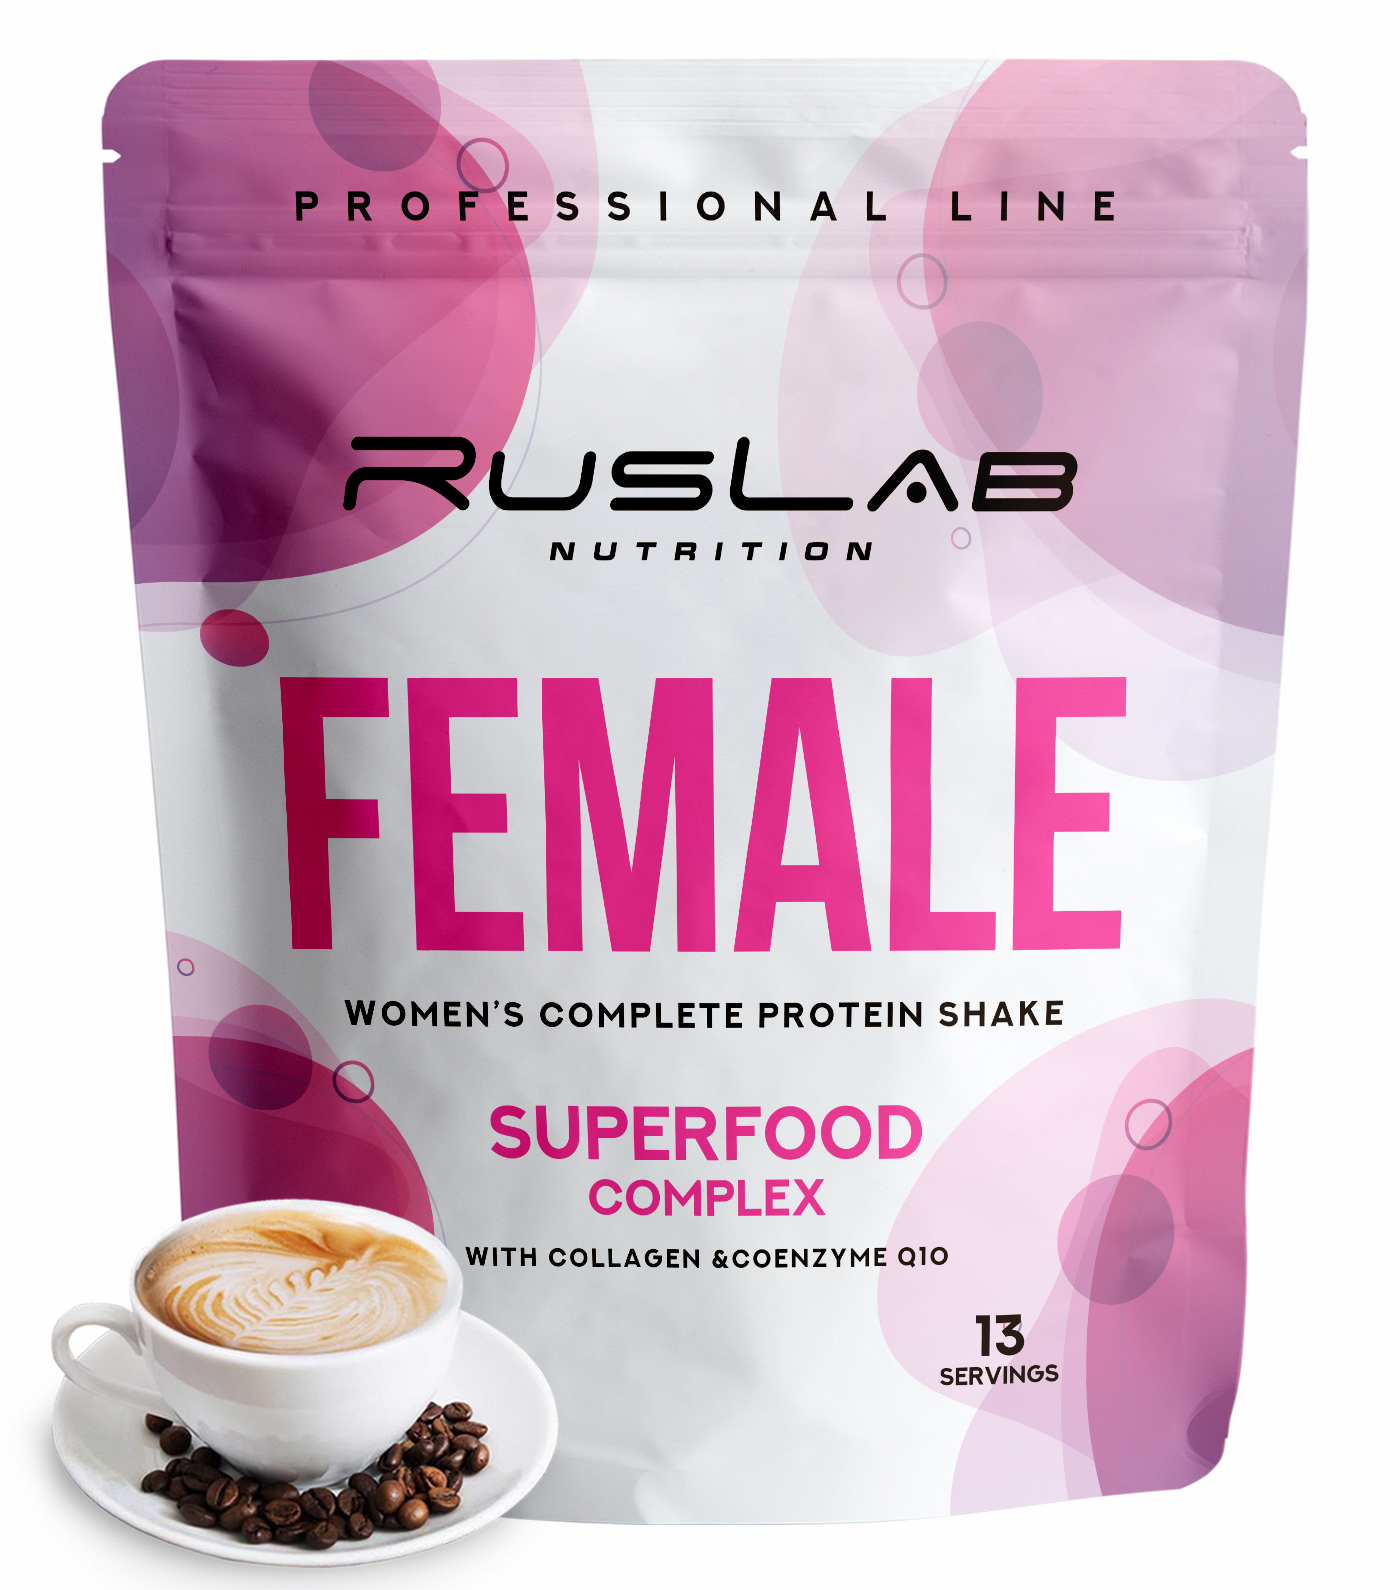 FEMALE Super Food Complex RusLabNutrition 416гр вкус капучино